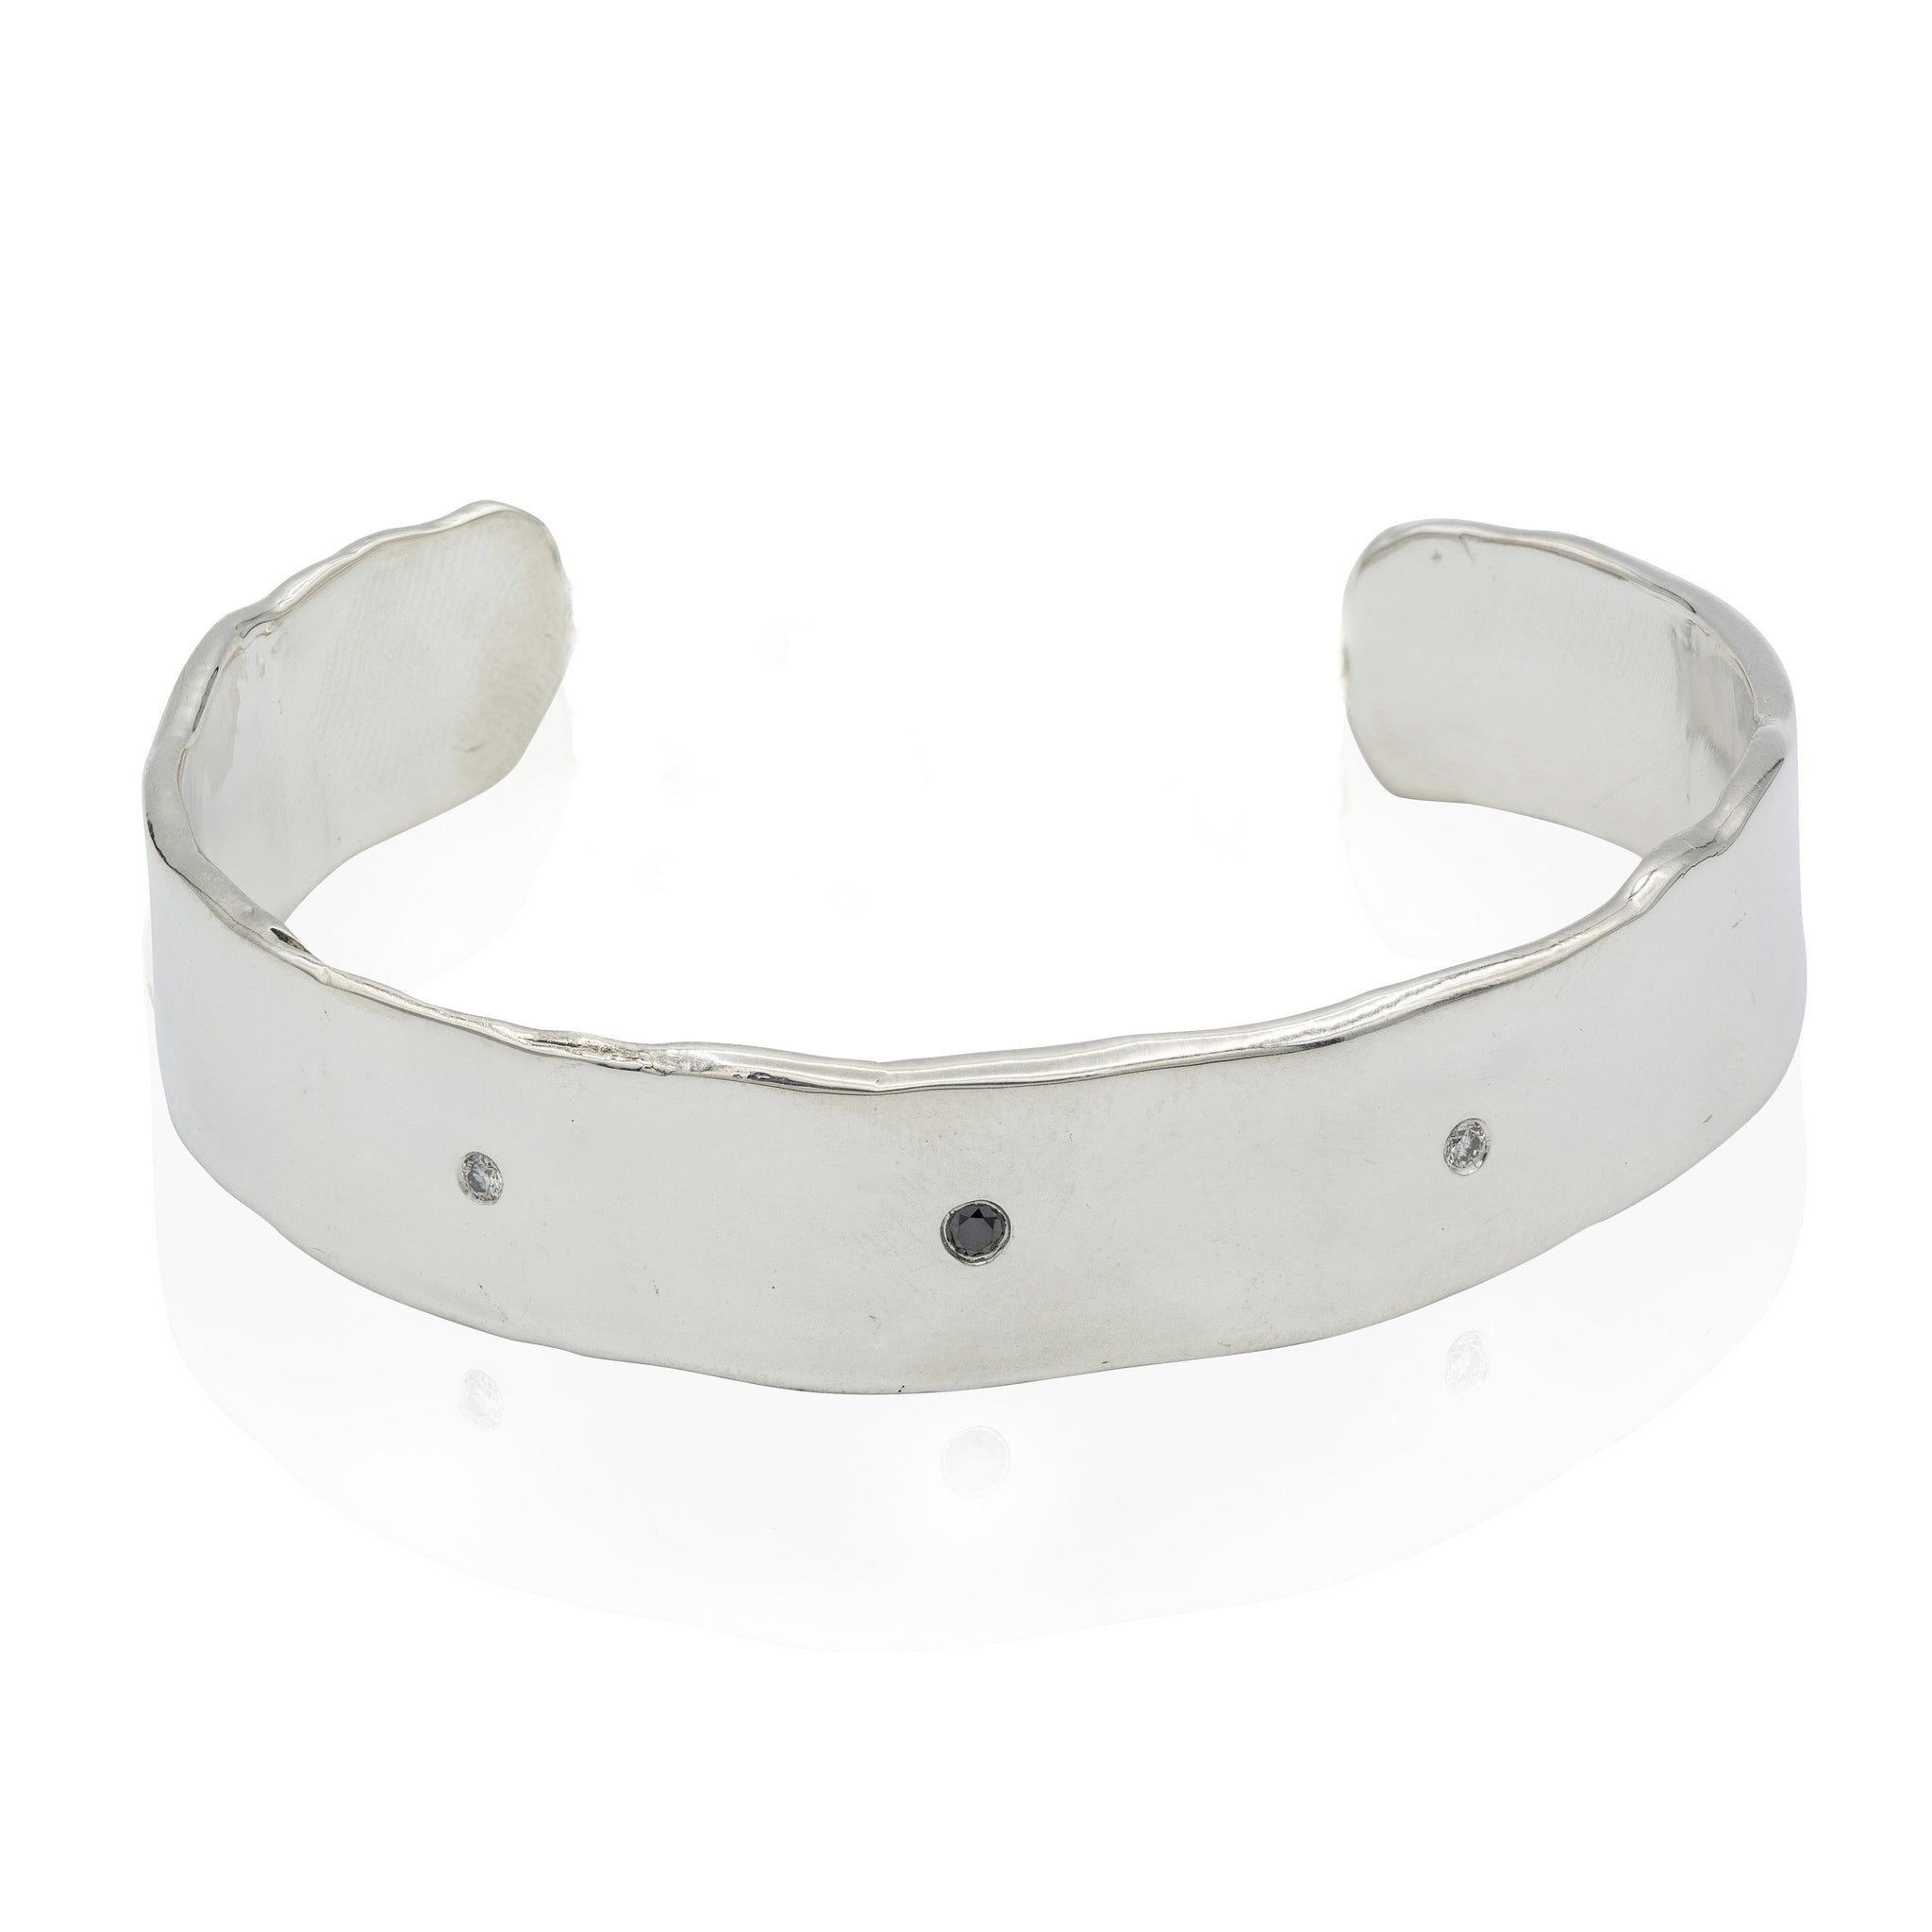 black diamond cuff bracelet sterling silver fashion fine jewelry barneys new york handmade jewelry